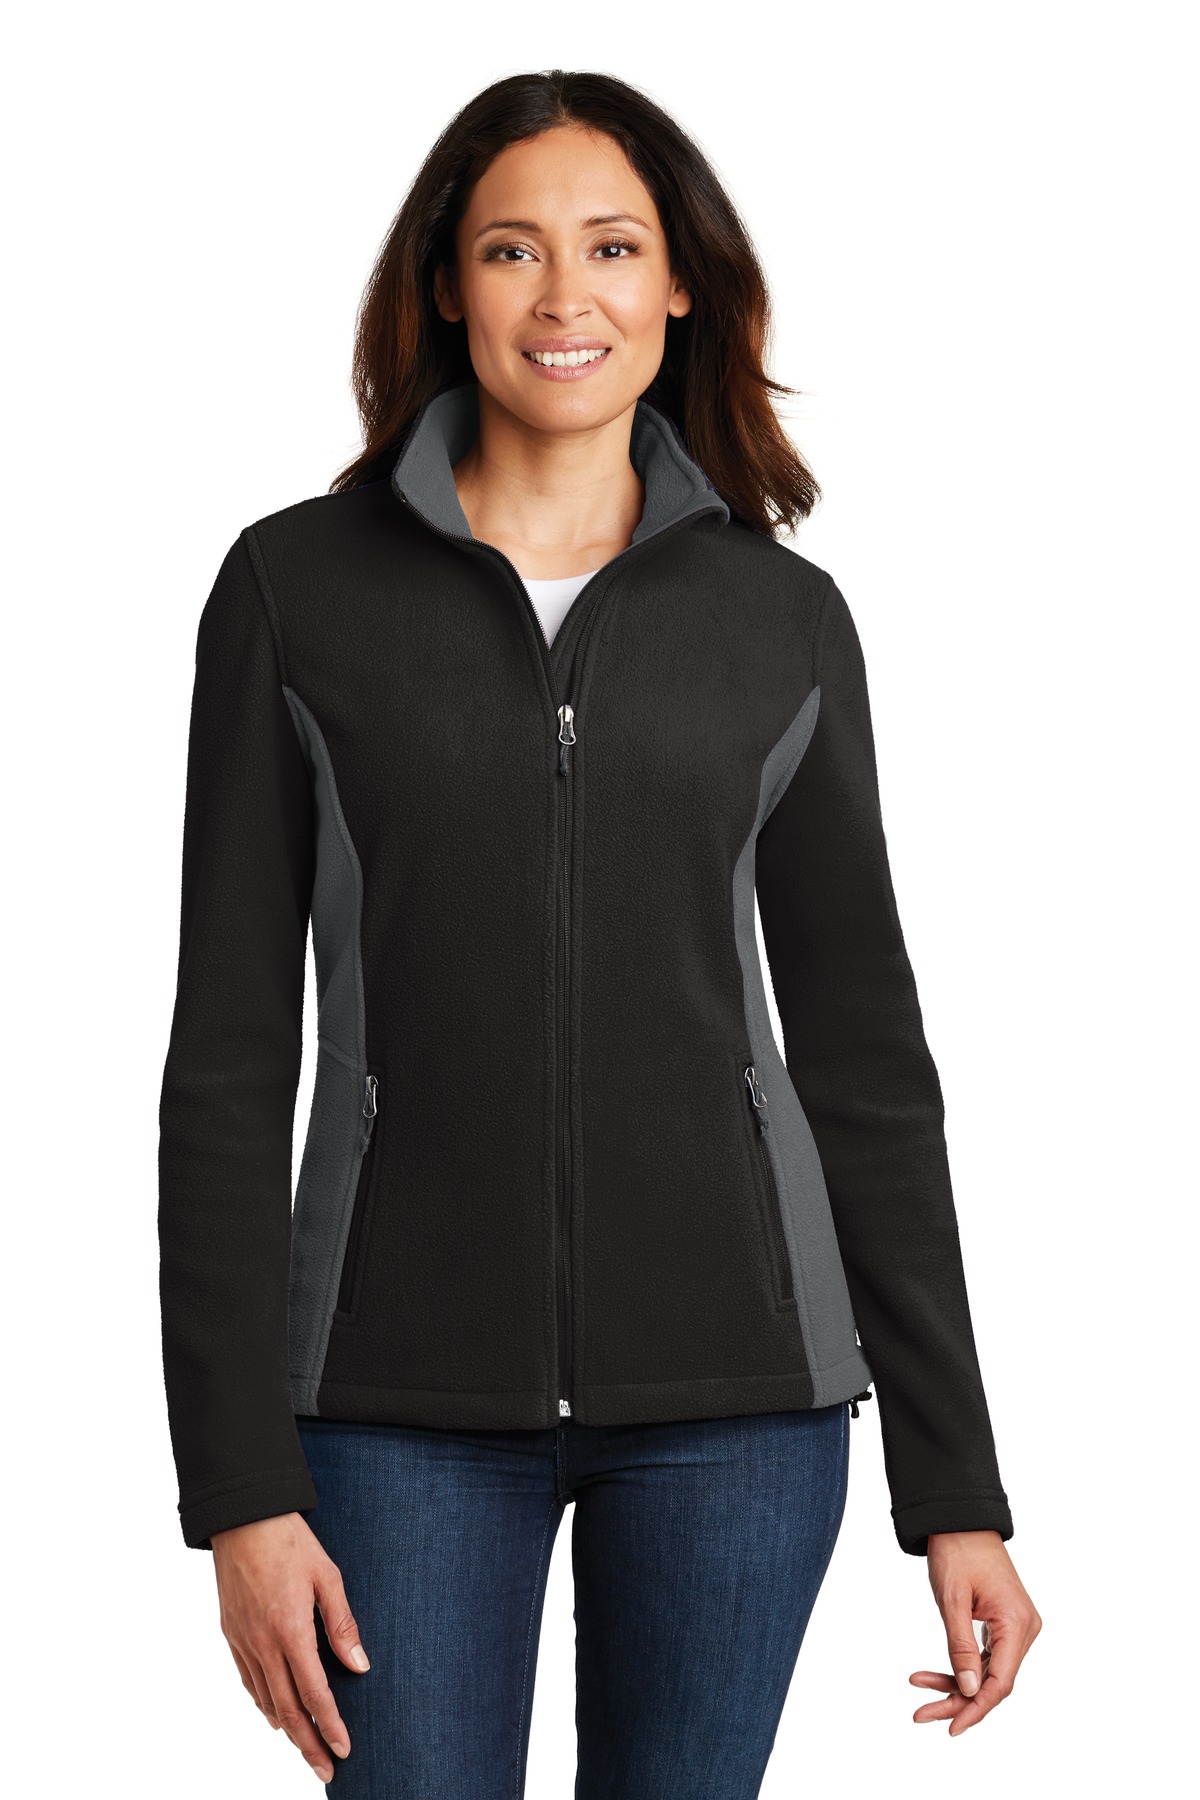 Port Authority Corporate Hospitality Ladies Sweatshirts & Fleece ® Ladies Colorblock Value Fleece Jacket.-Port Authority